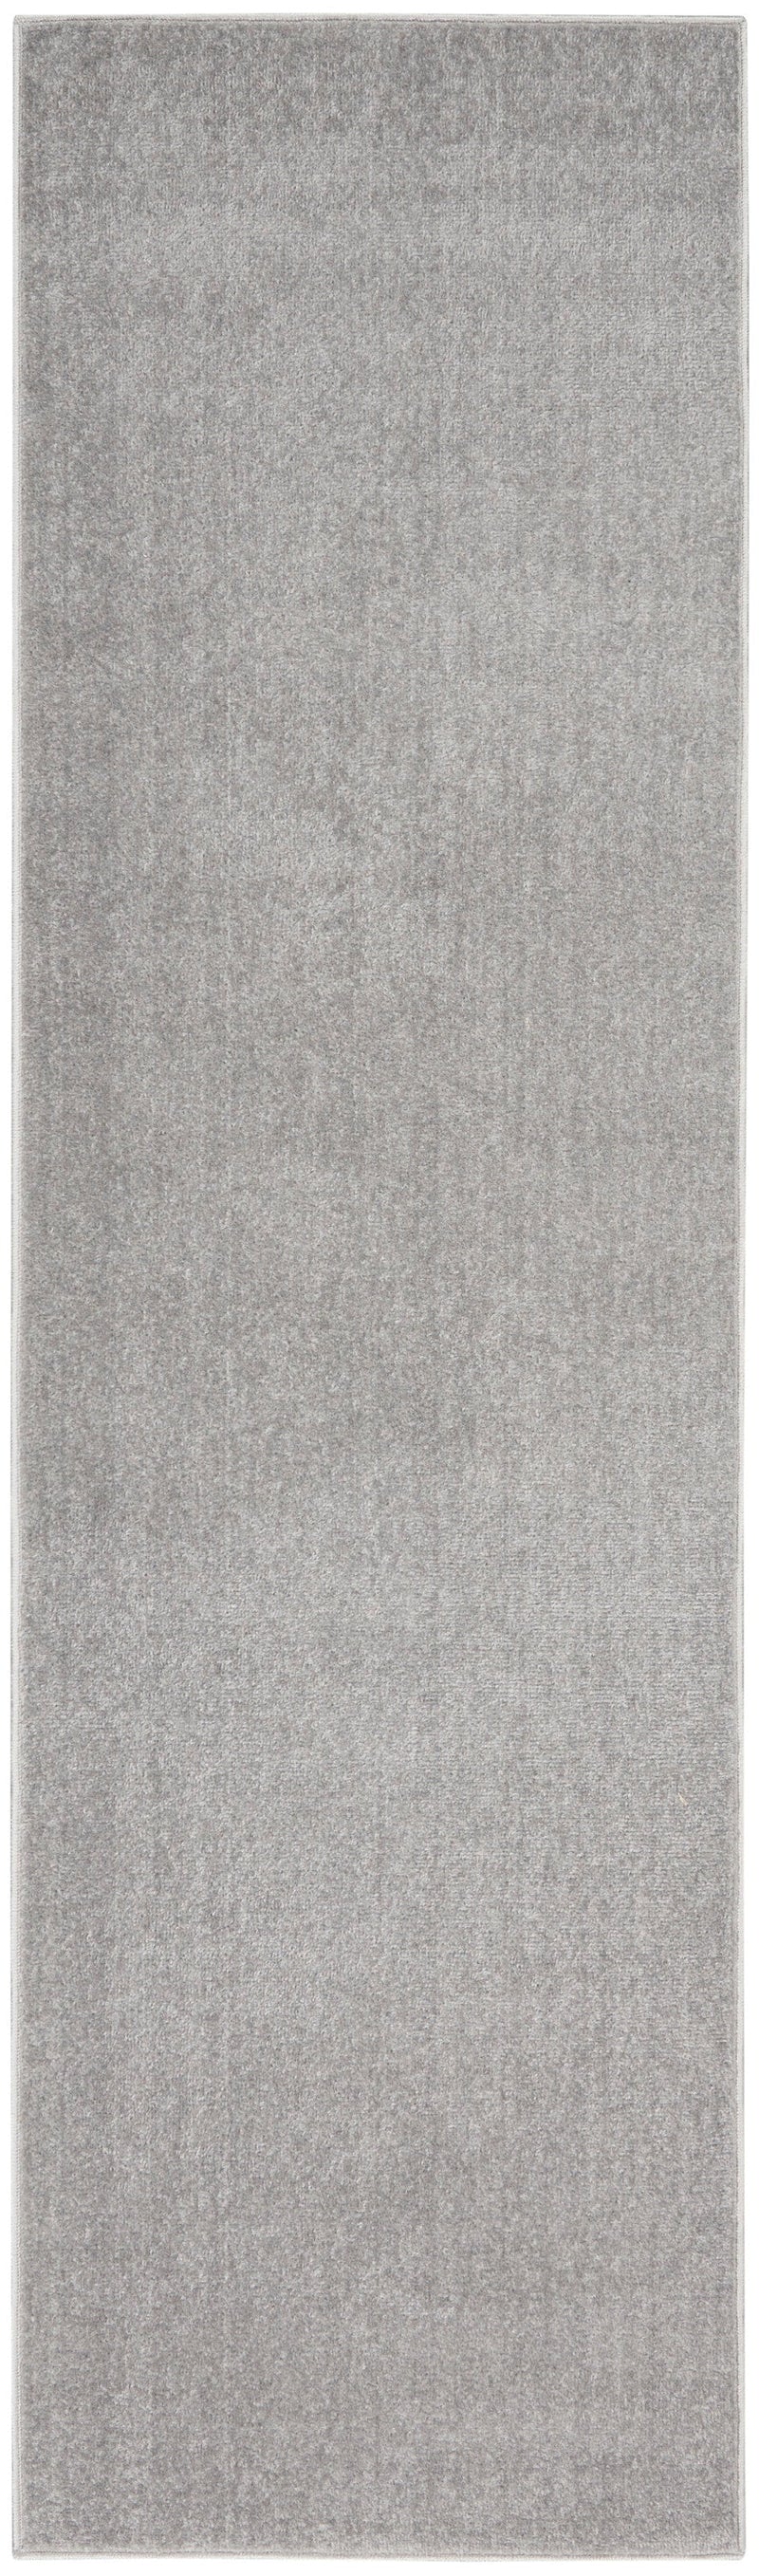 media image for nourison essentials silver grey rug by nourison 99446062369 redo 4 253